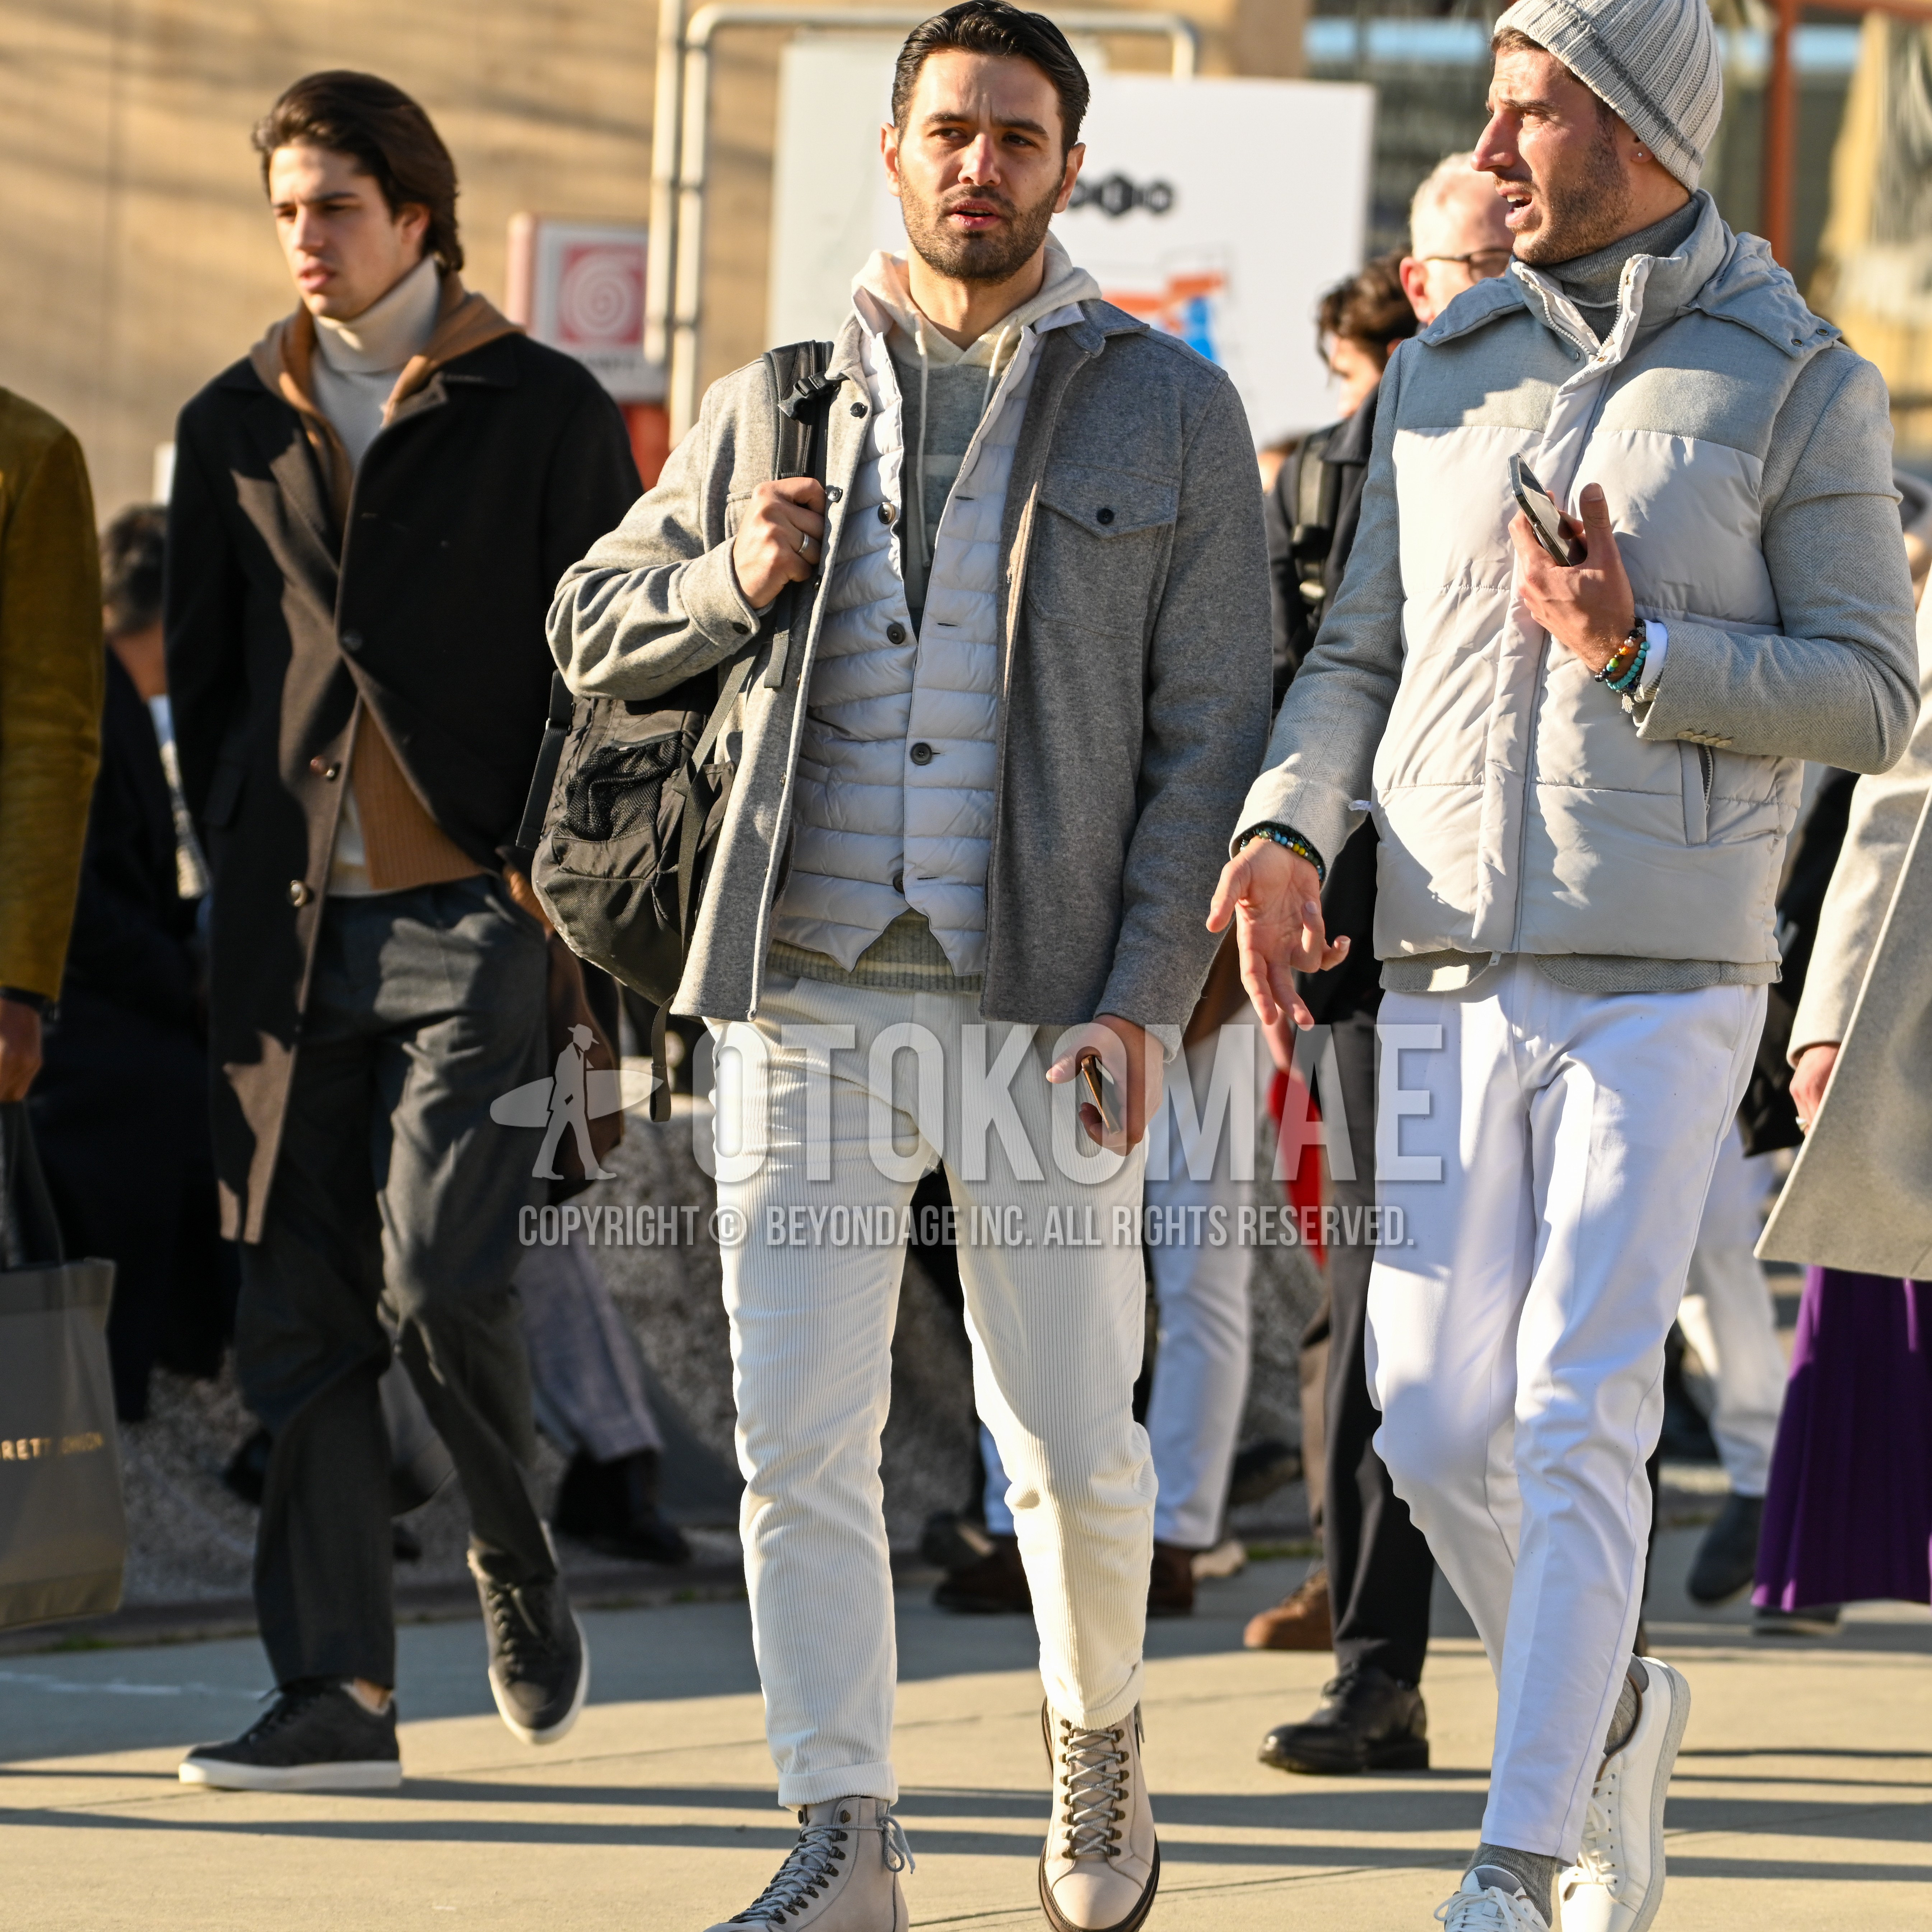 Men's autumn winter outfit with gray plain shirt jacket, gray plain inner down, gray white horizontal stripes hoodie, white plain winter pants (corduroy,velour), gray work boots, black plain backpack.